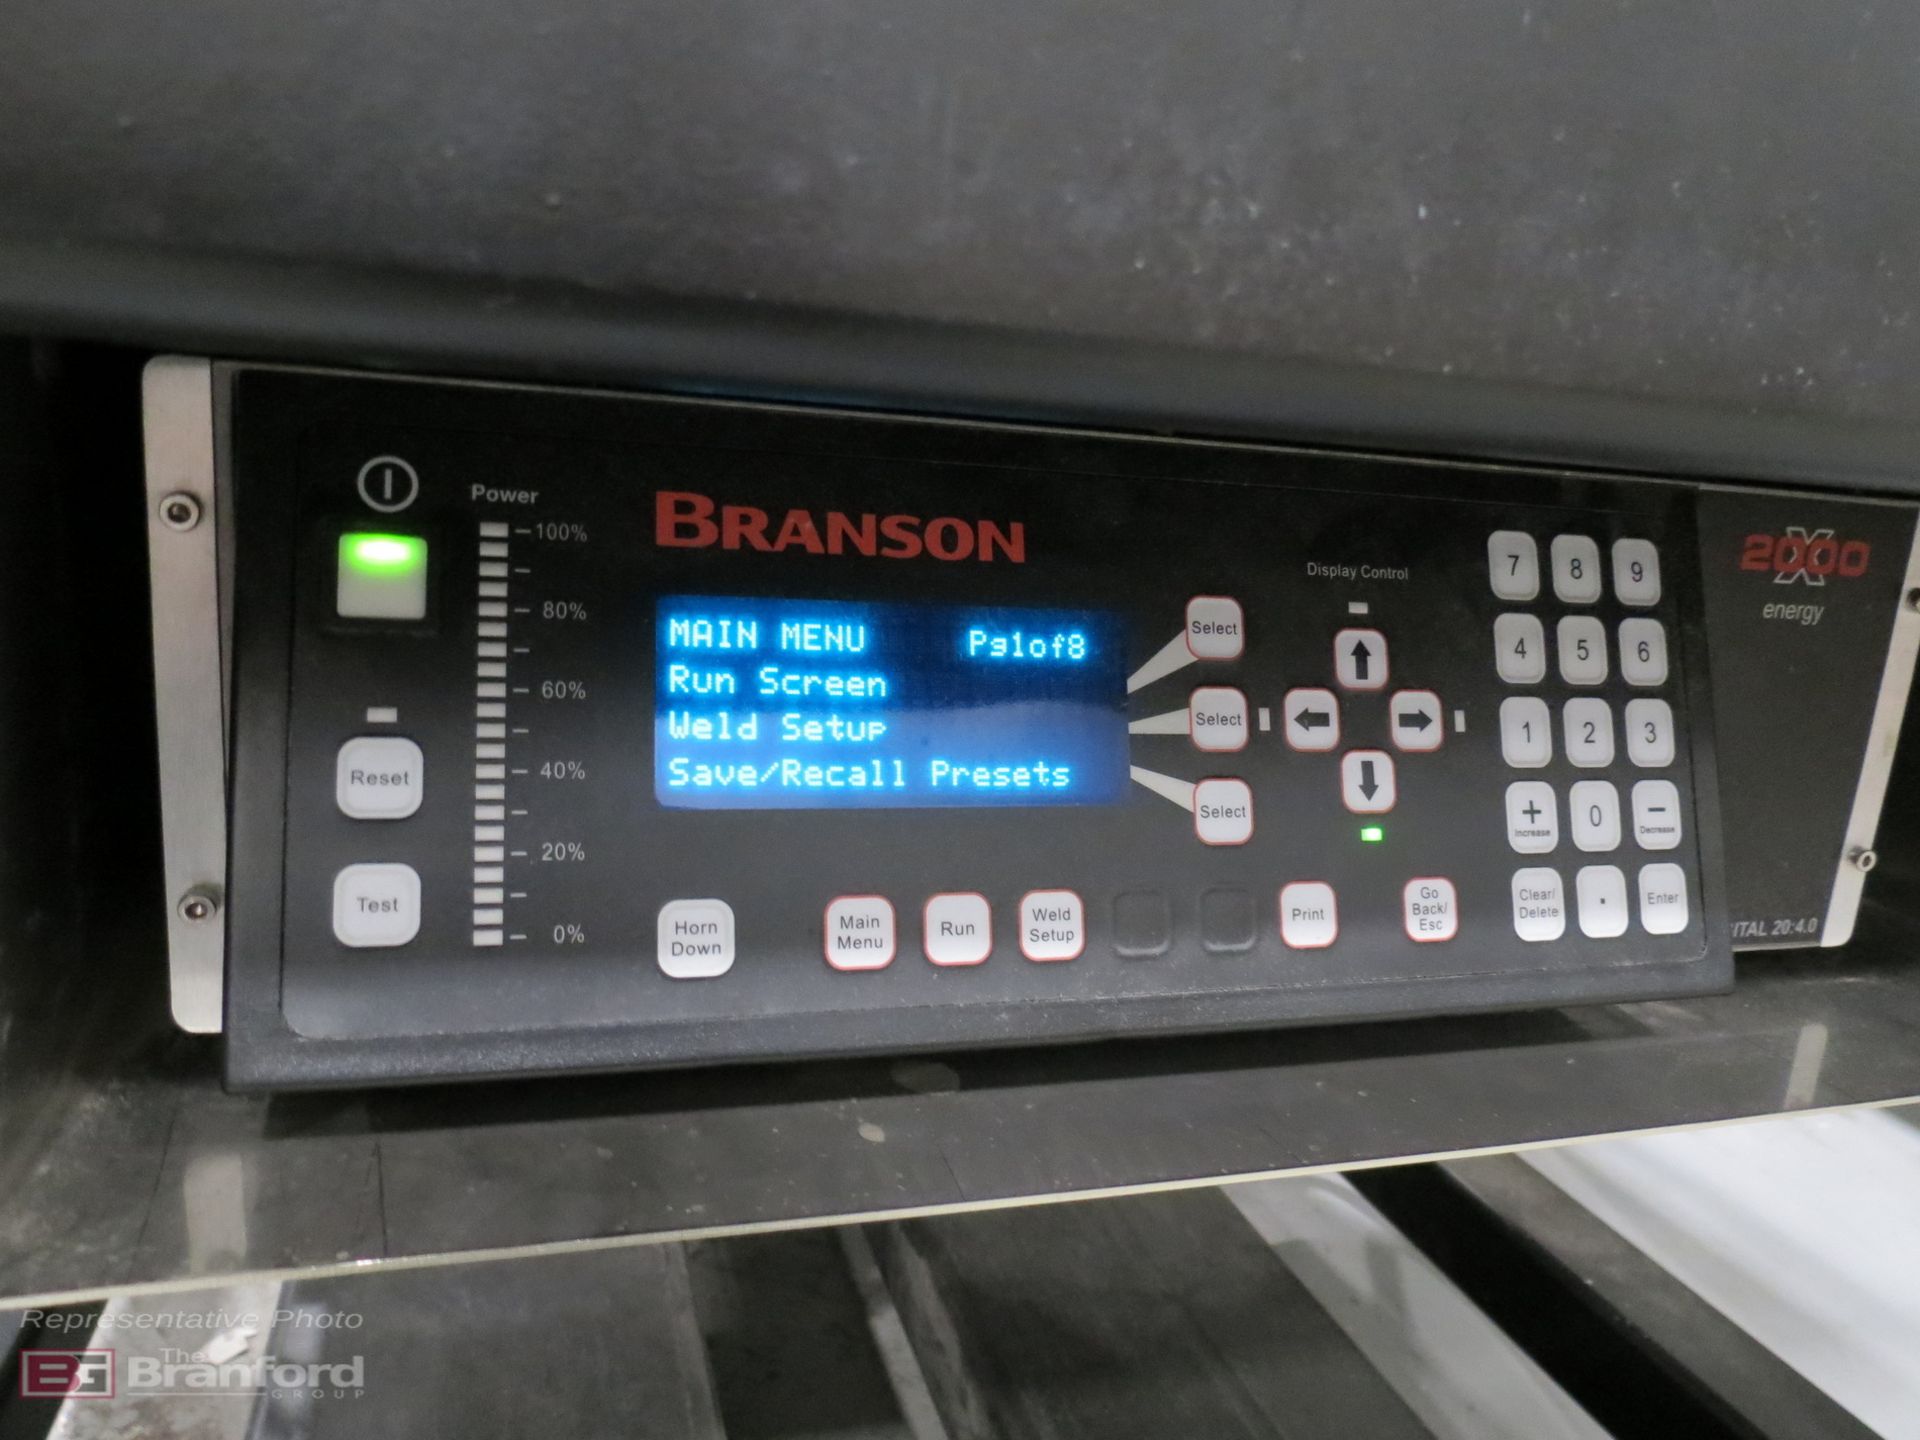 Branson 4000-watt model 2000xeat 20:4.0 Power Supply - Image 2 of 2